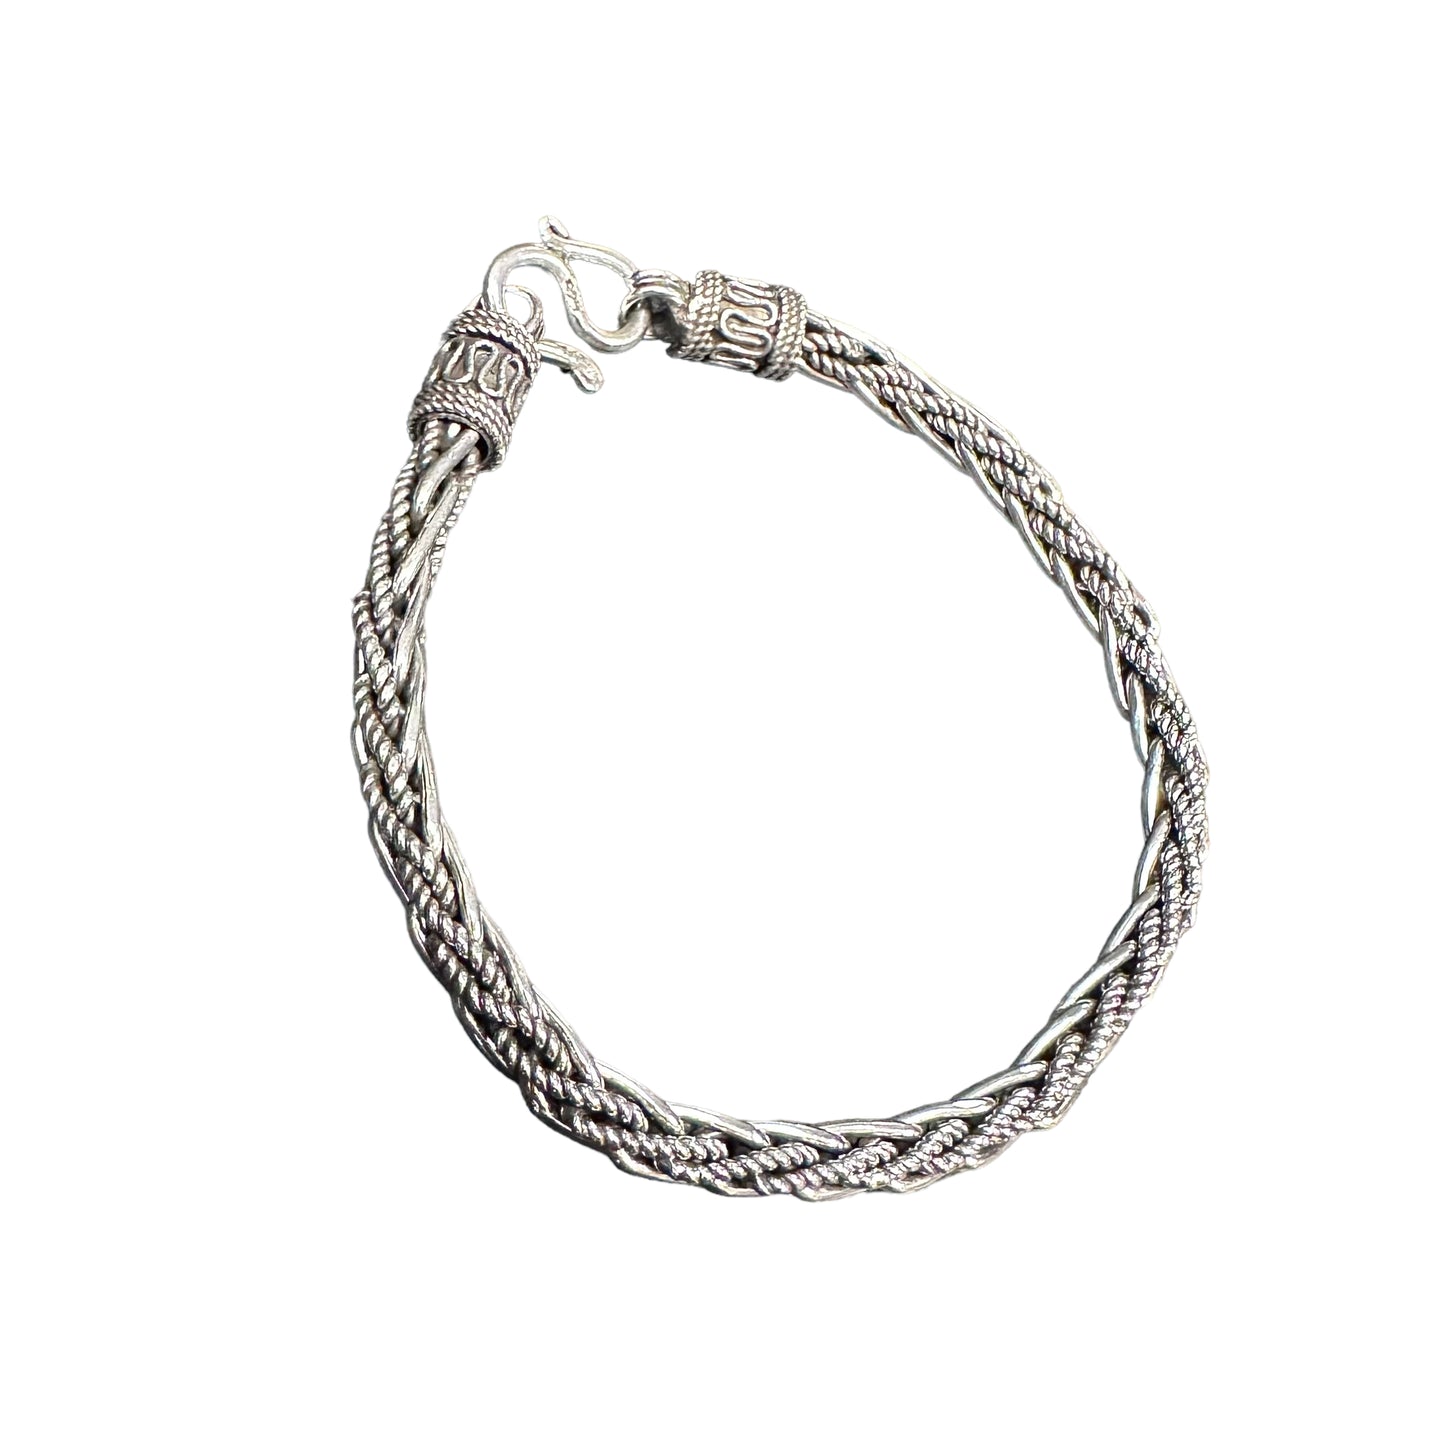 Handmade Braided Foxtail 5mm Sterling Silver Bracelet Chain